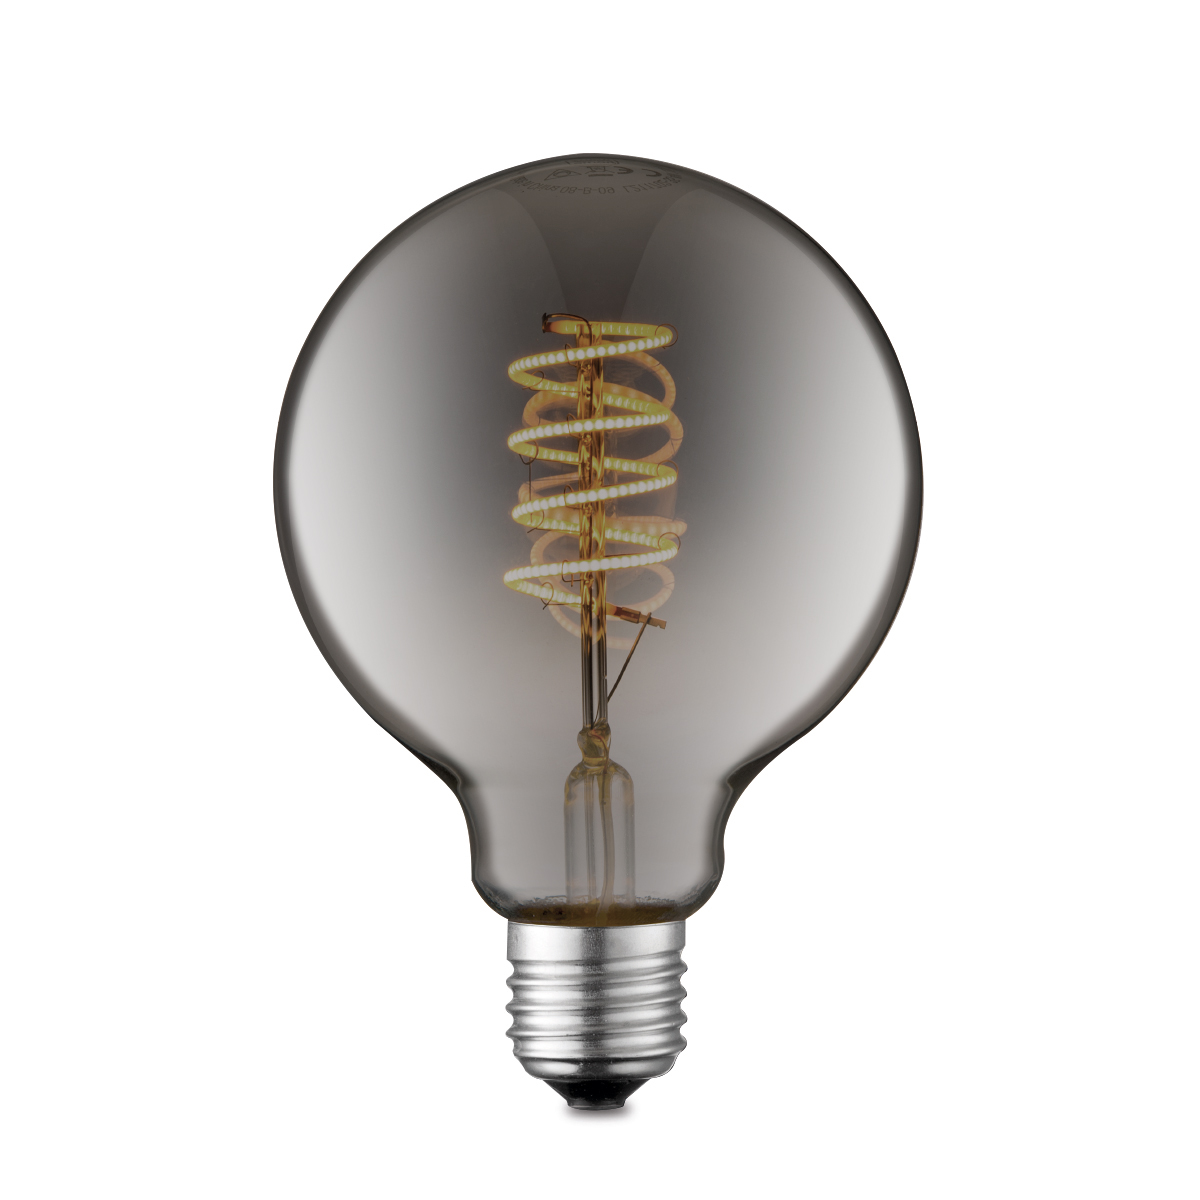 Tangla lighting - TLB-8007-04TM - LED Light Bulb Double Spiral filament - G80 4W titanium - dimmable - E27